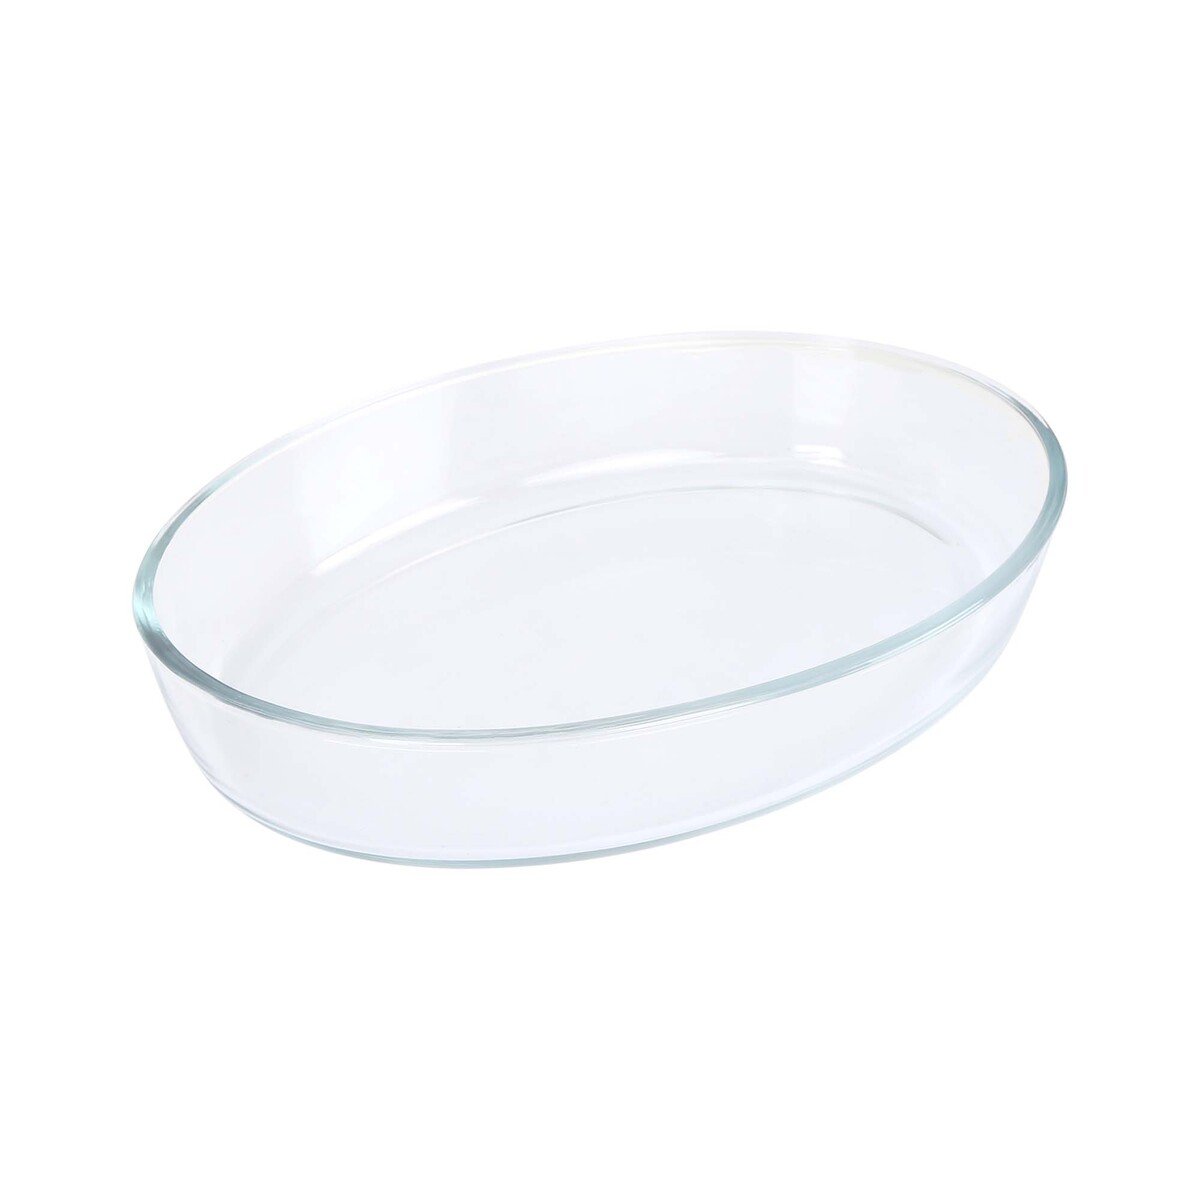 Chefline HSAP24L Borosilicate Glass Oval Baking Dish, 2.4 Litre, Transparent